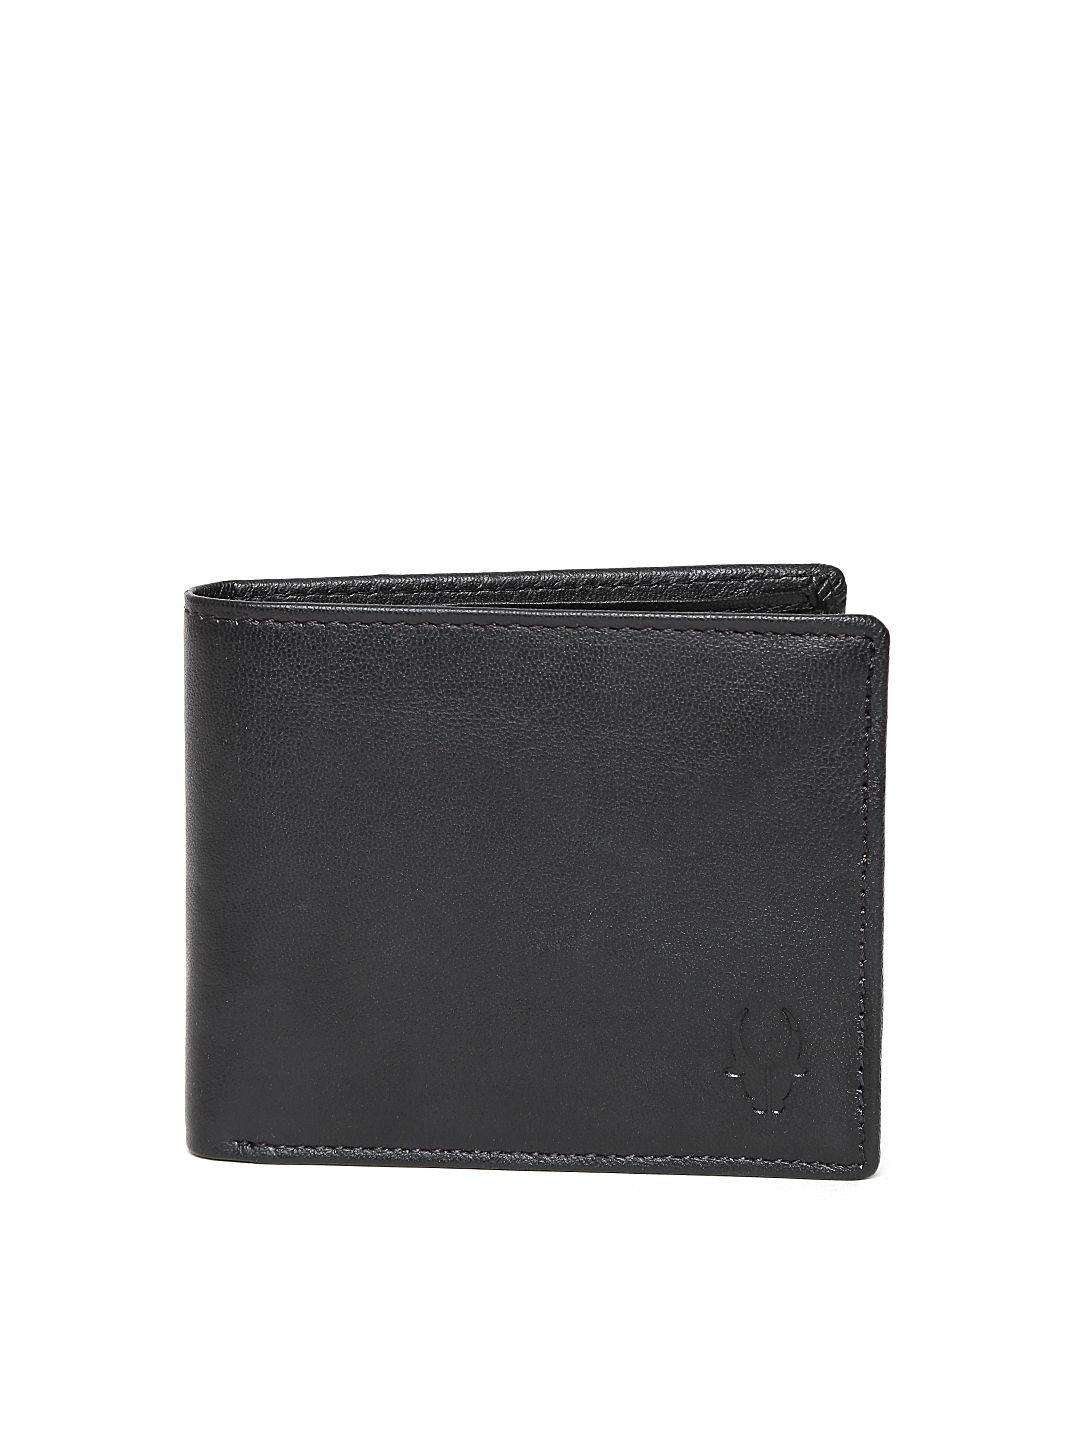 wildhorn men black leather wallet